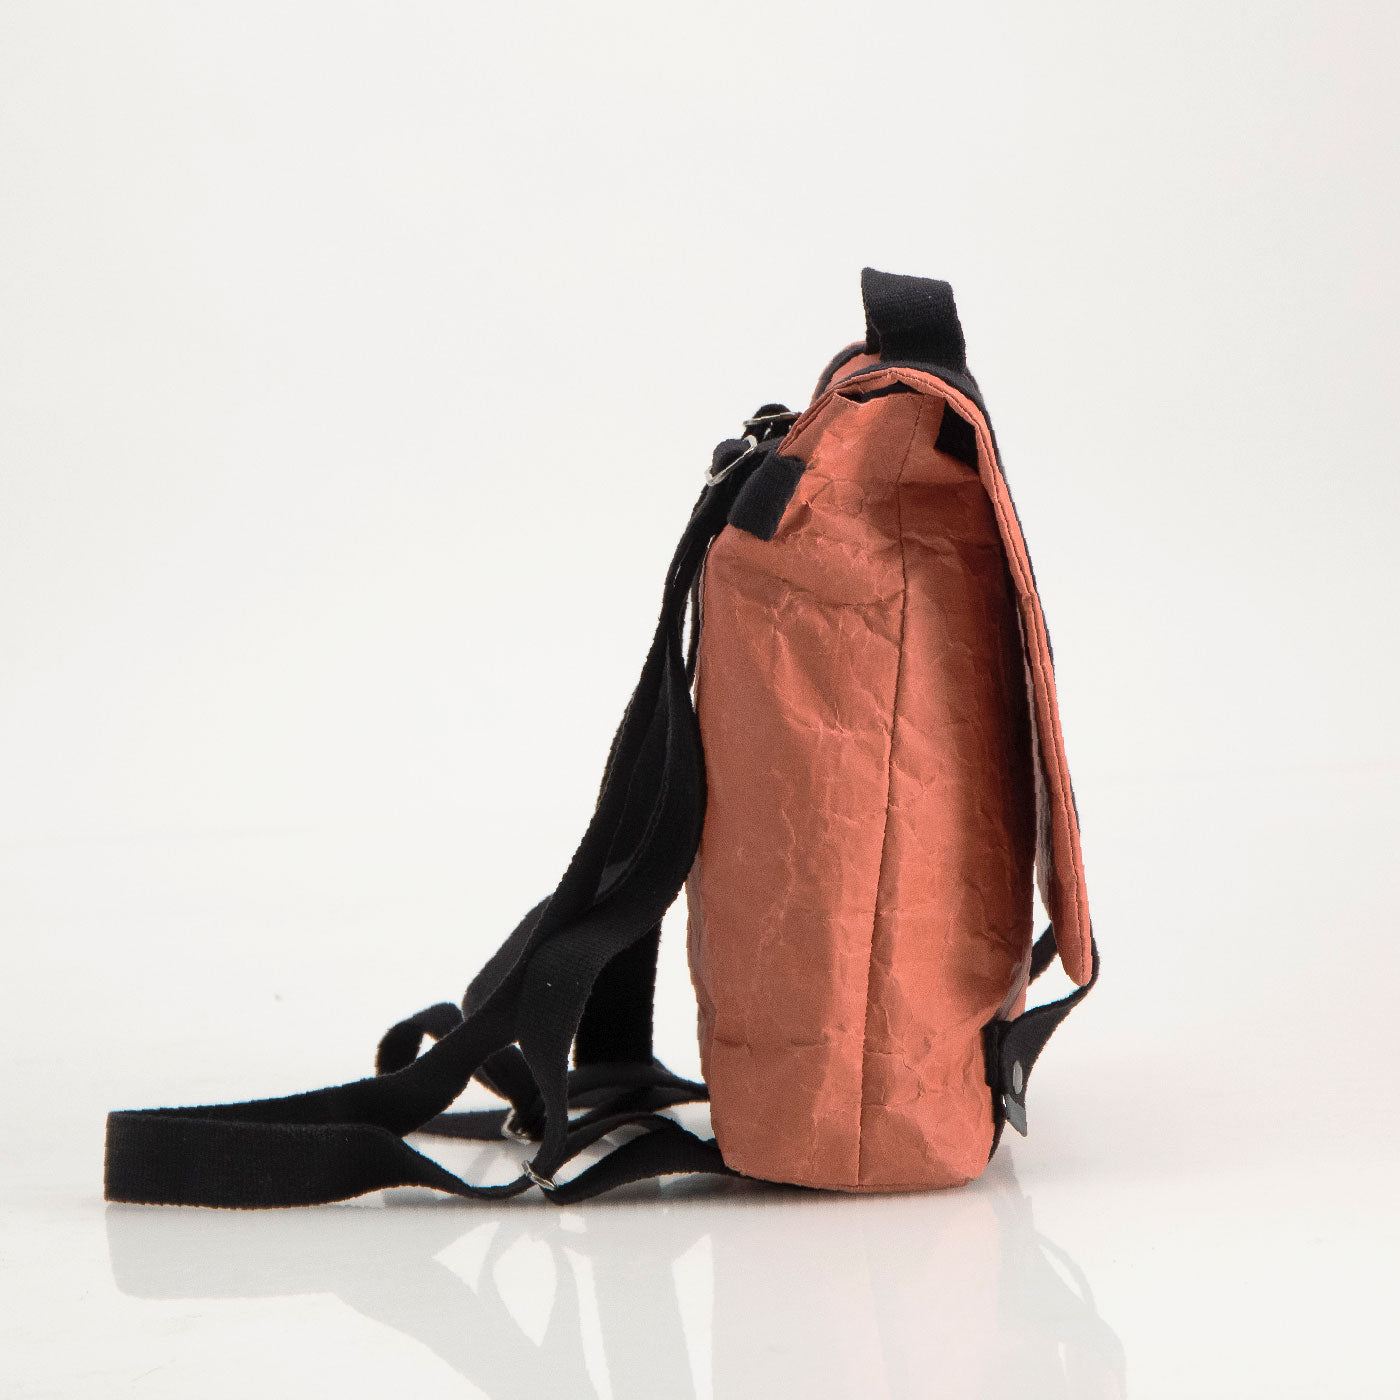 Backpack | aus recycletem Zementpapier